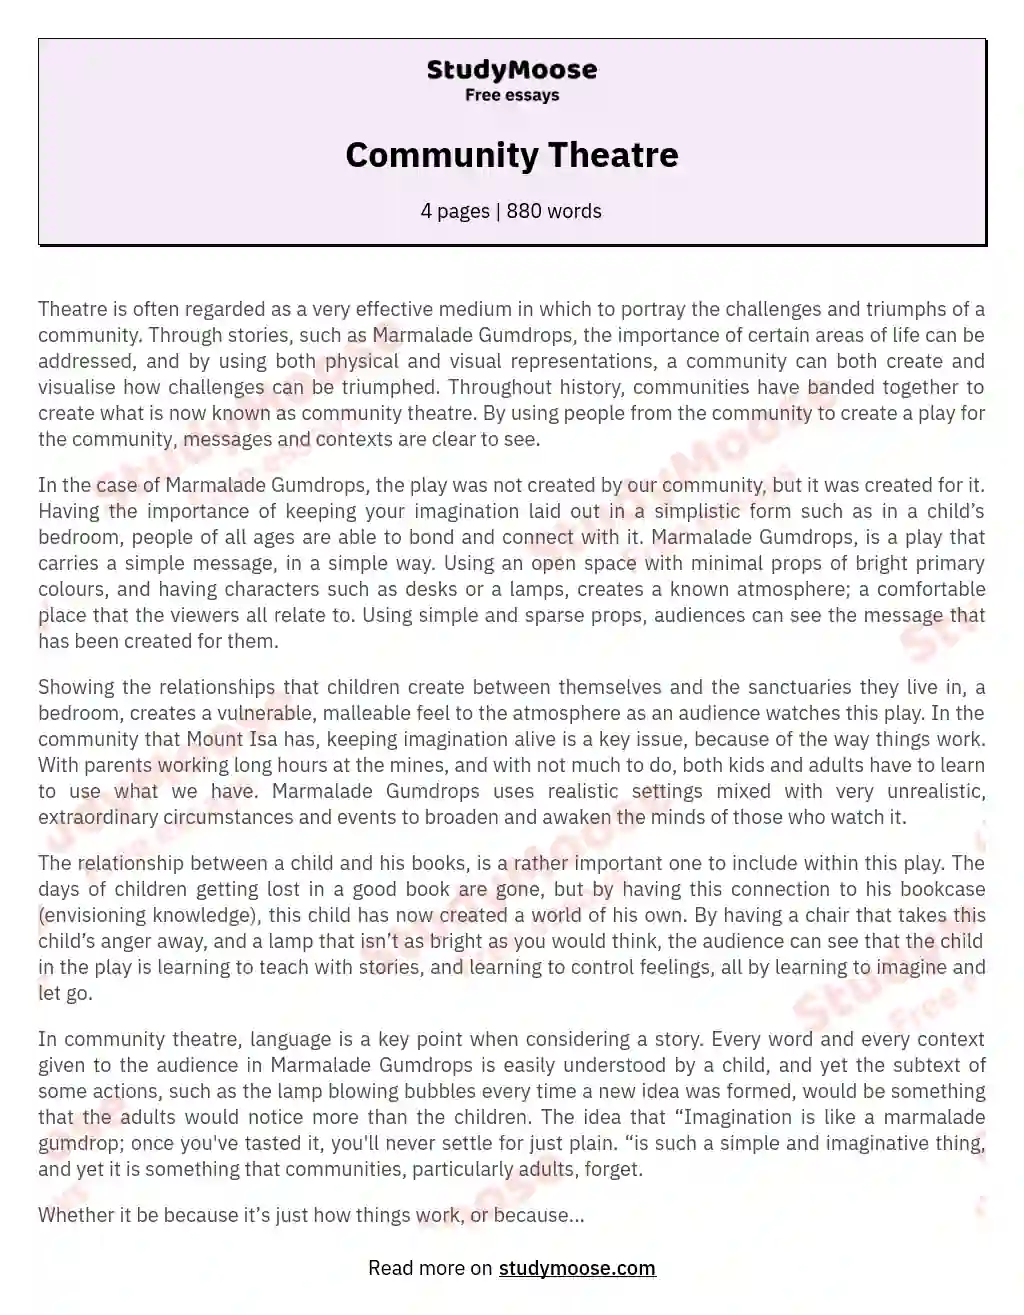 Community Theatre essay